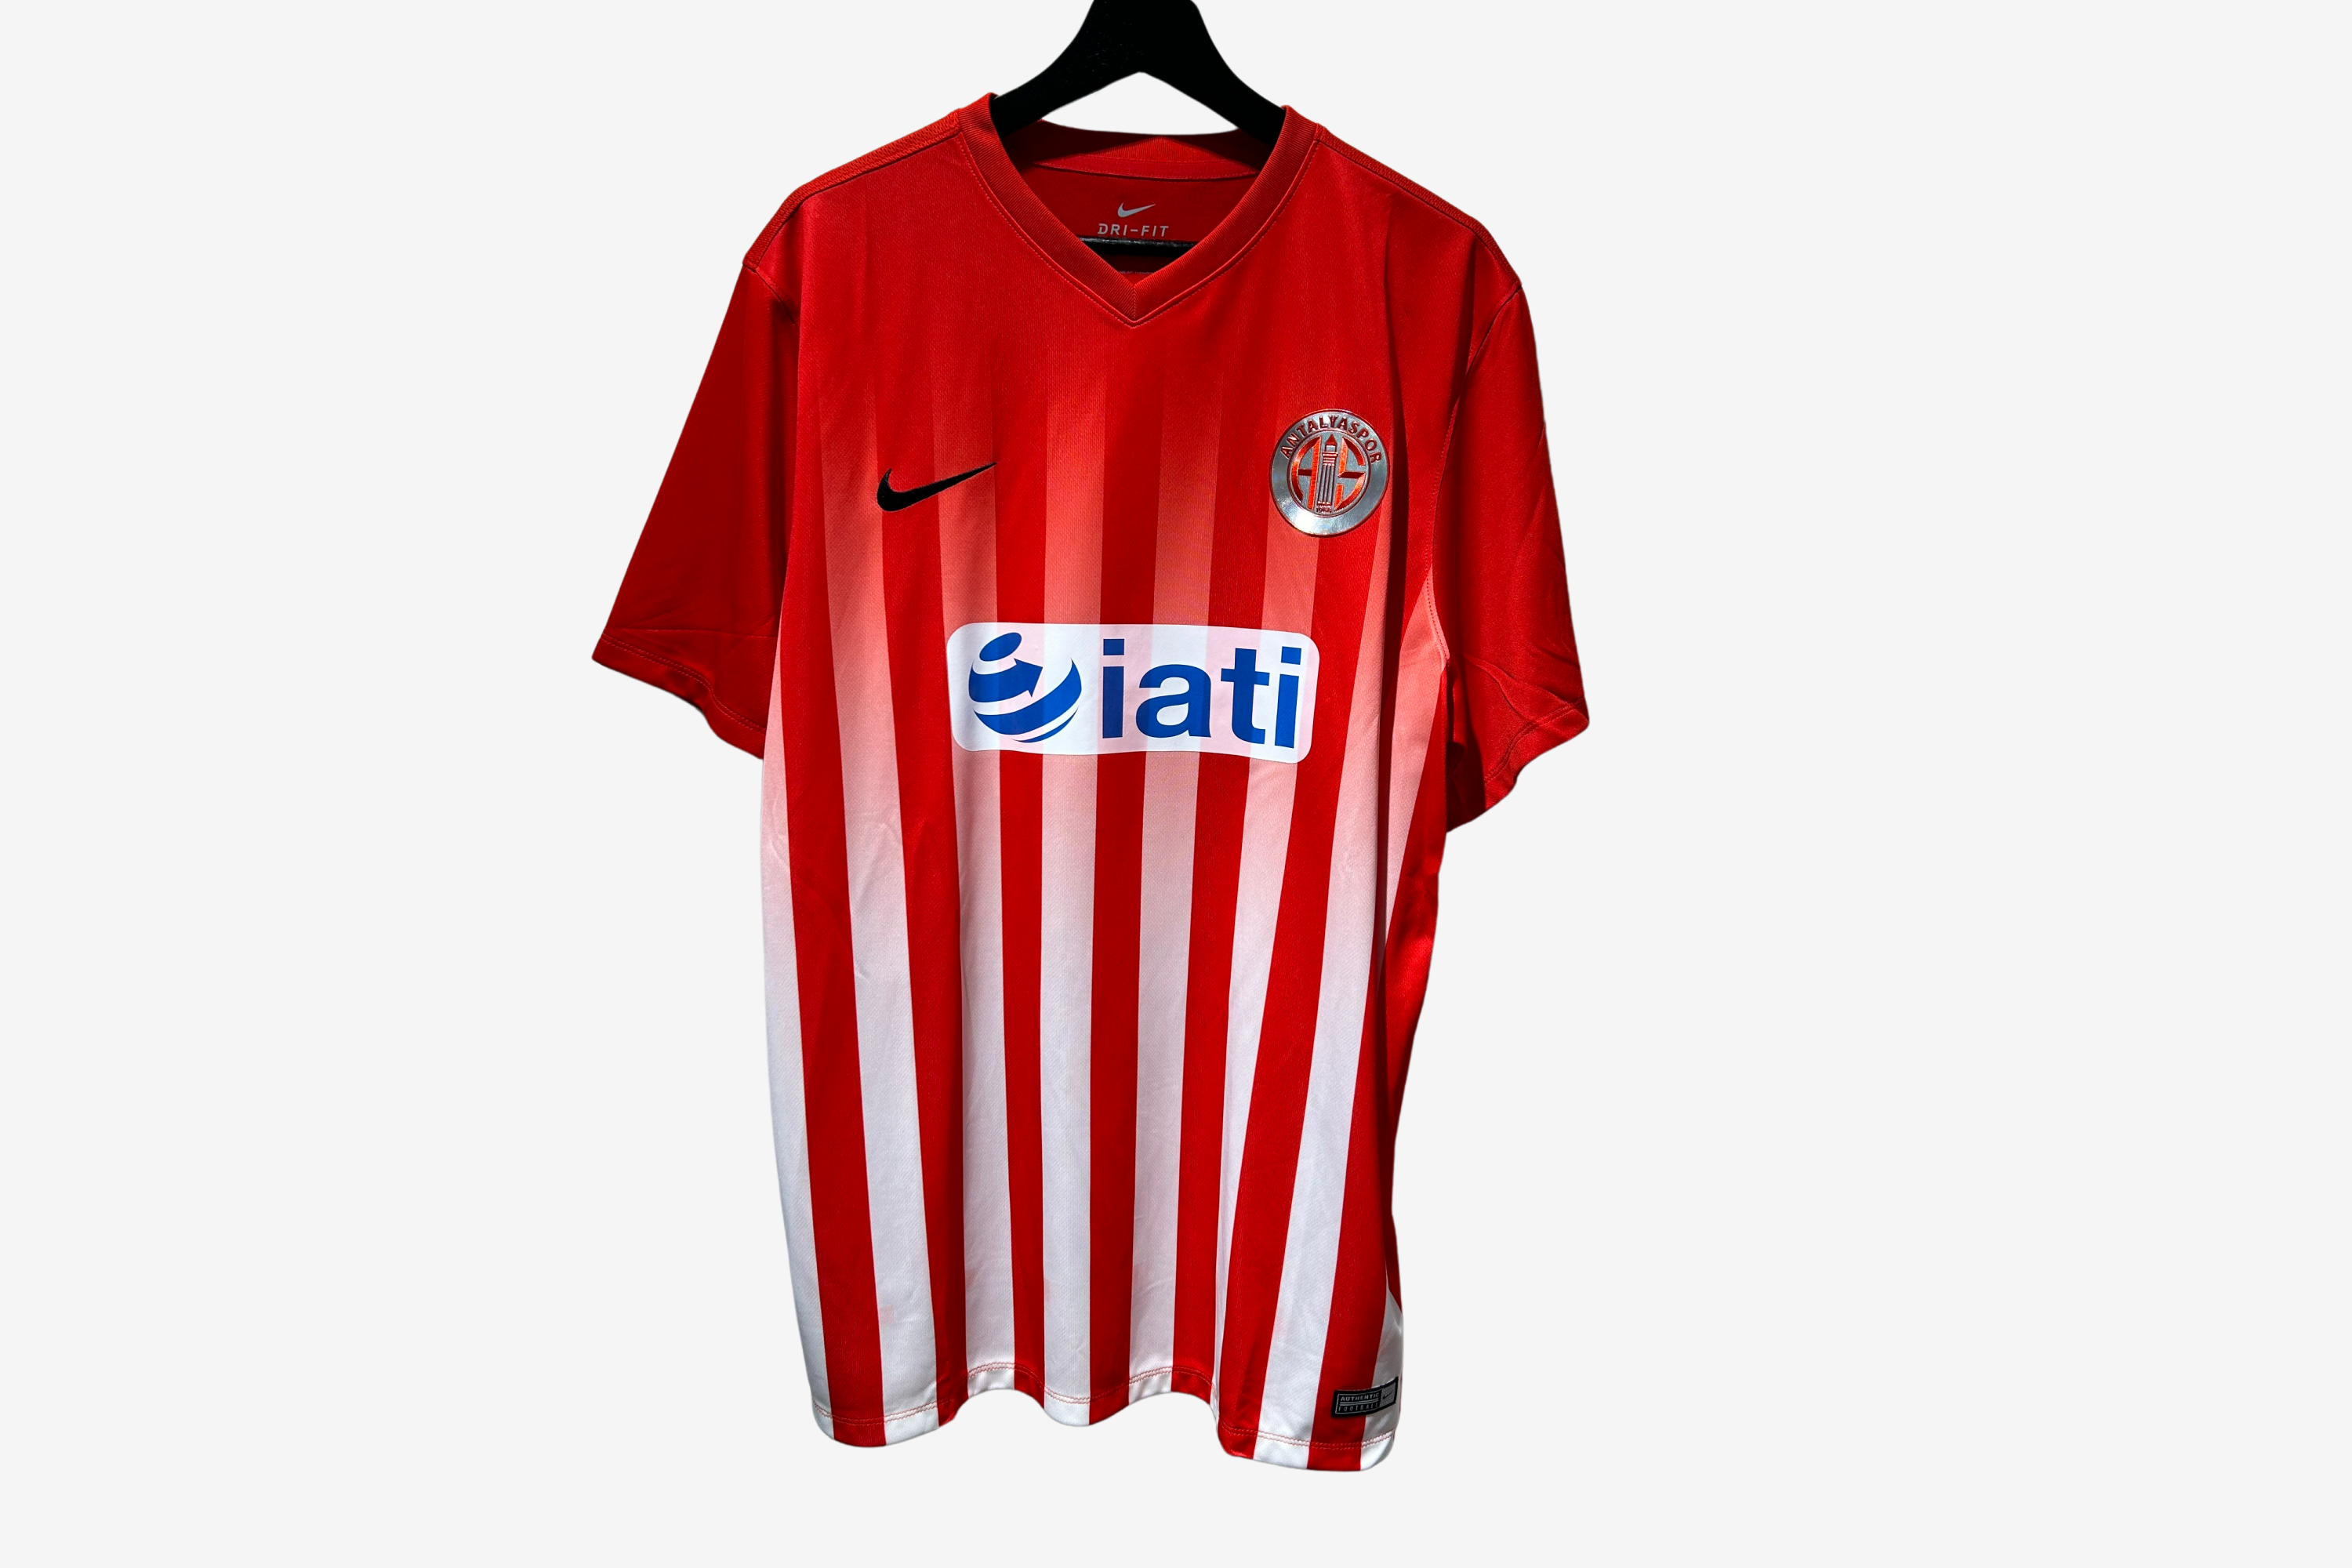 Nike - Antalyaspor 2016/17 Home Football Shirt 'ETO'O'